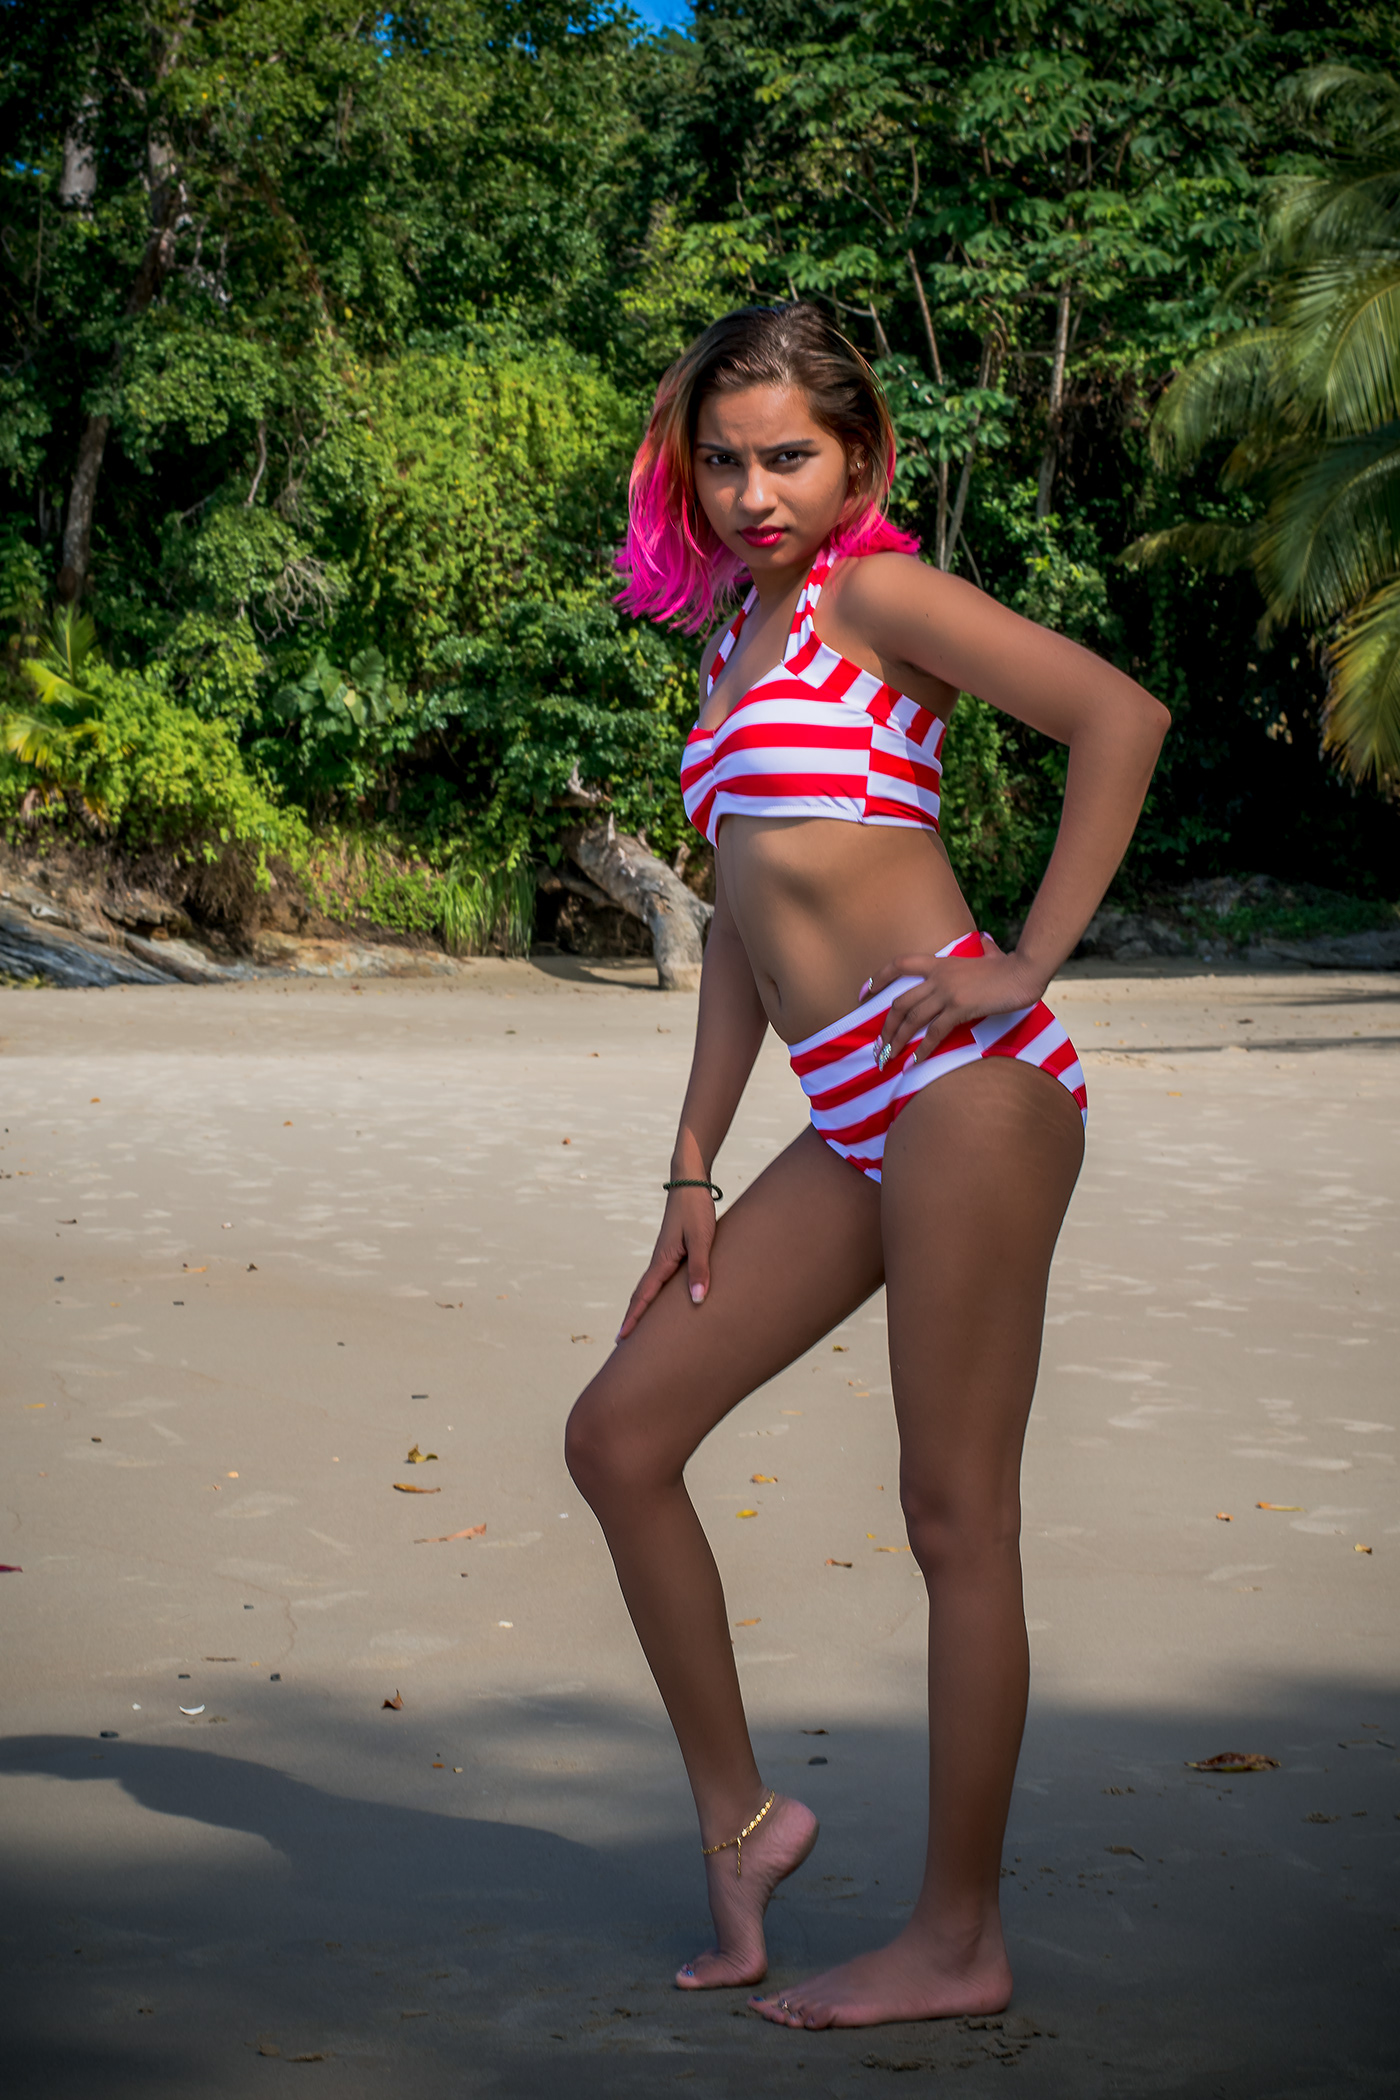 Outdoor portrait portrait photography model photoshoot Photography  Fashion  bikini swimwear summer